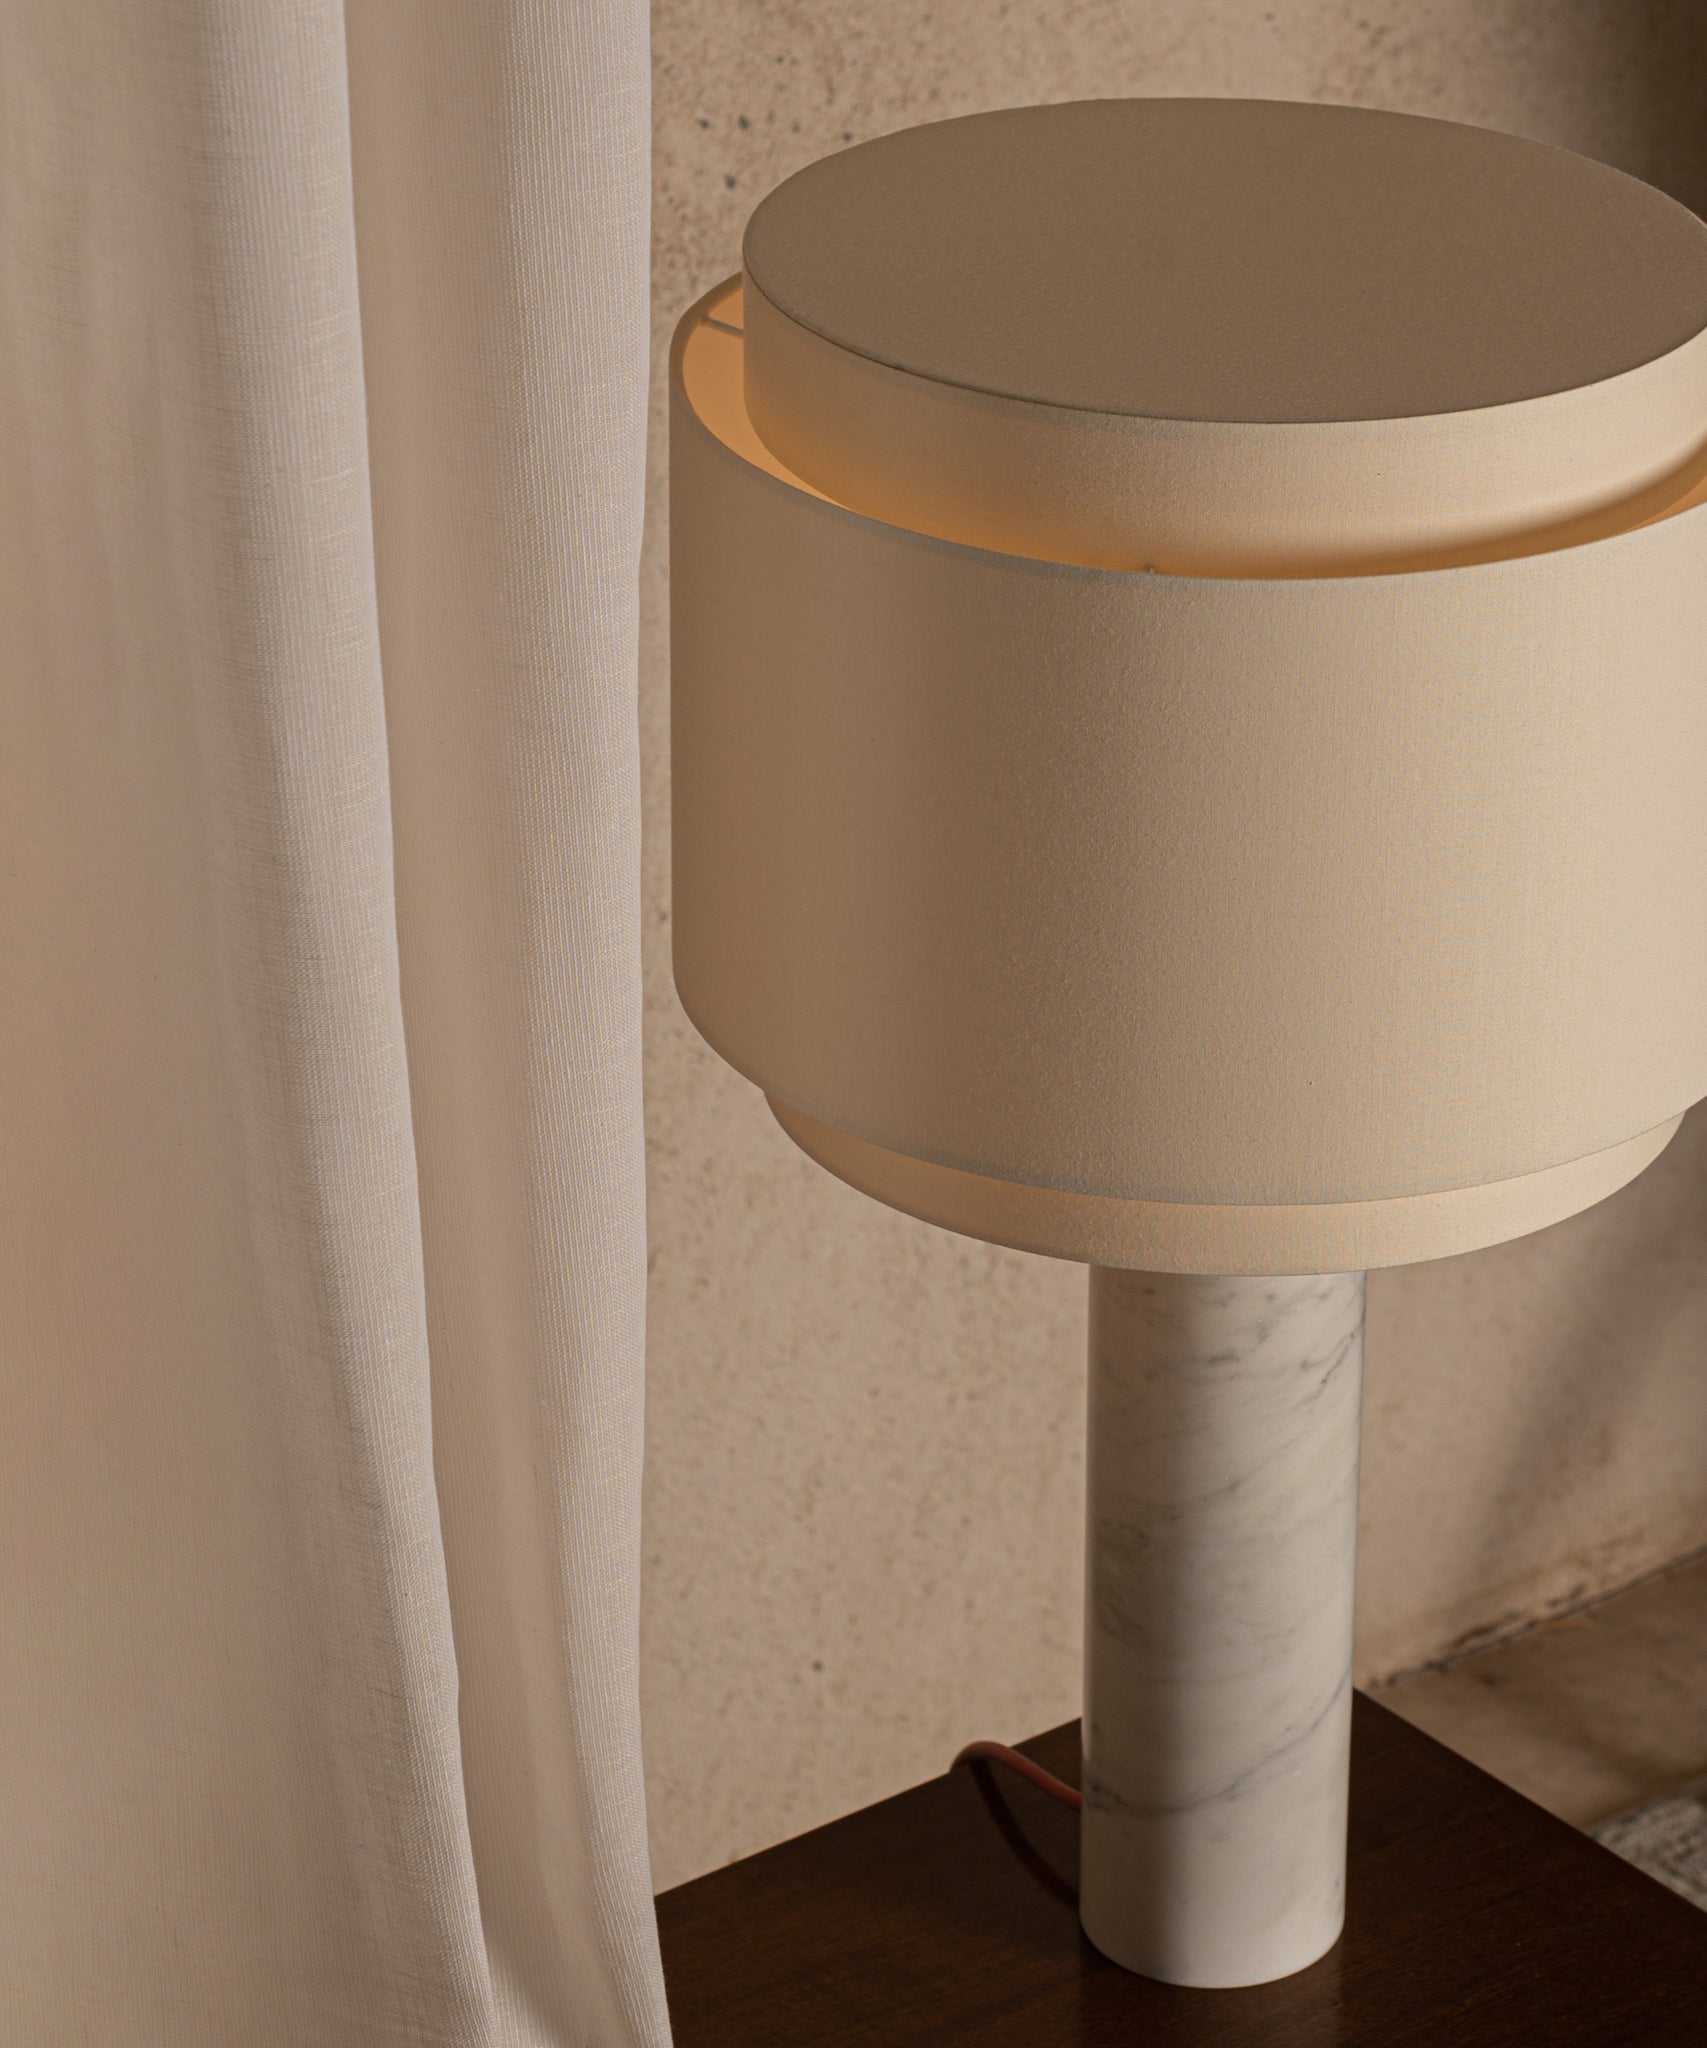 Pipo Duoble Table Lamp